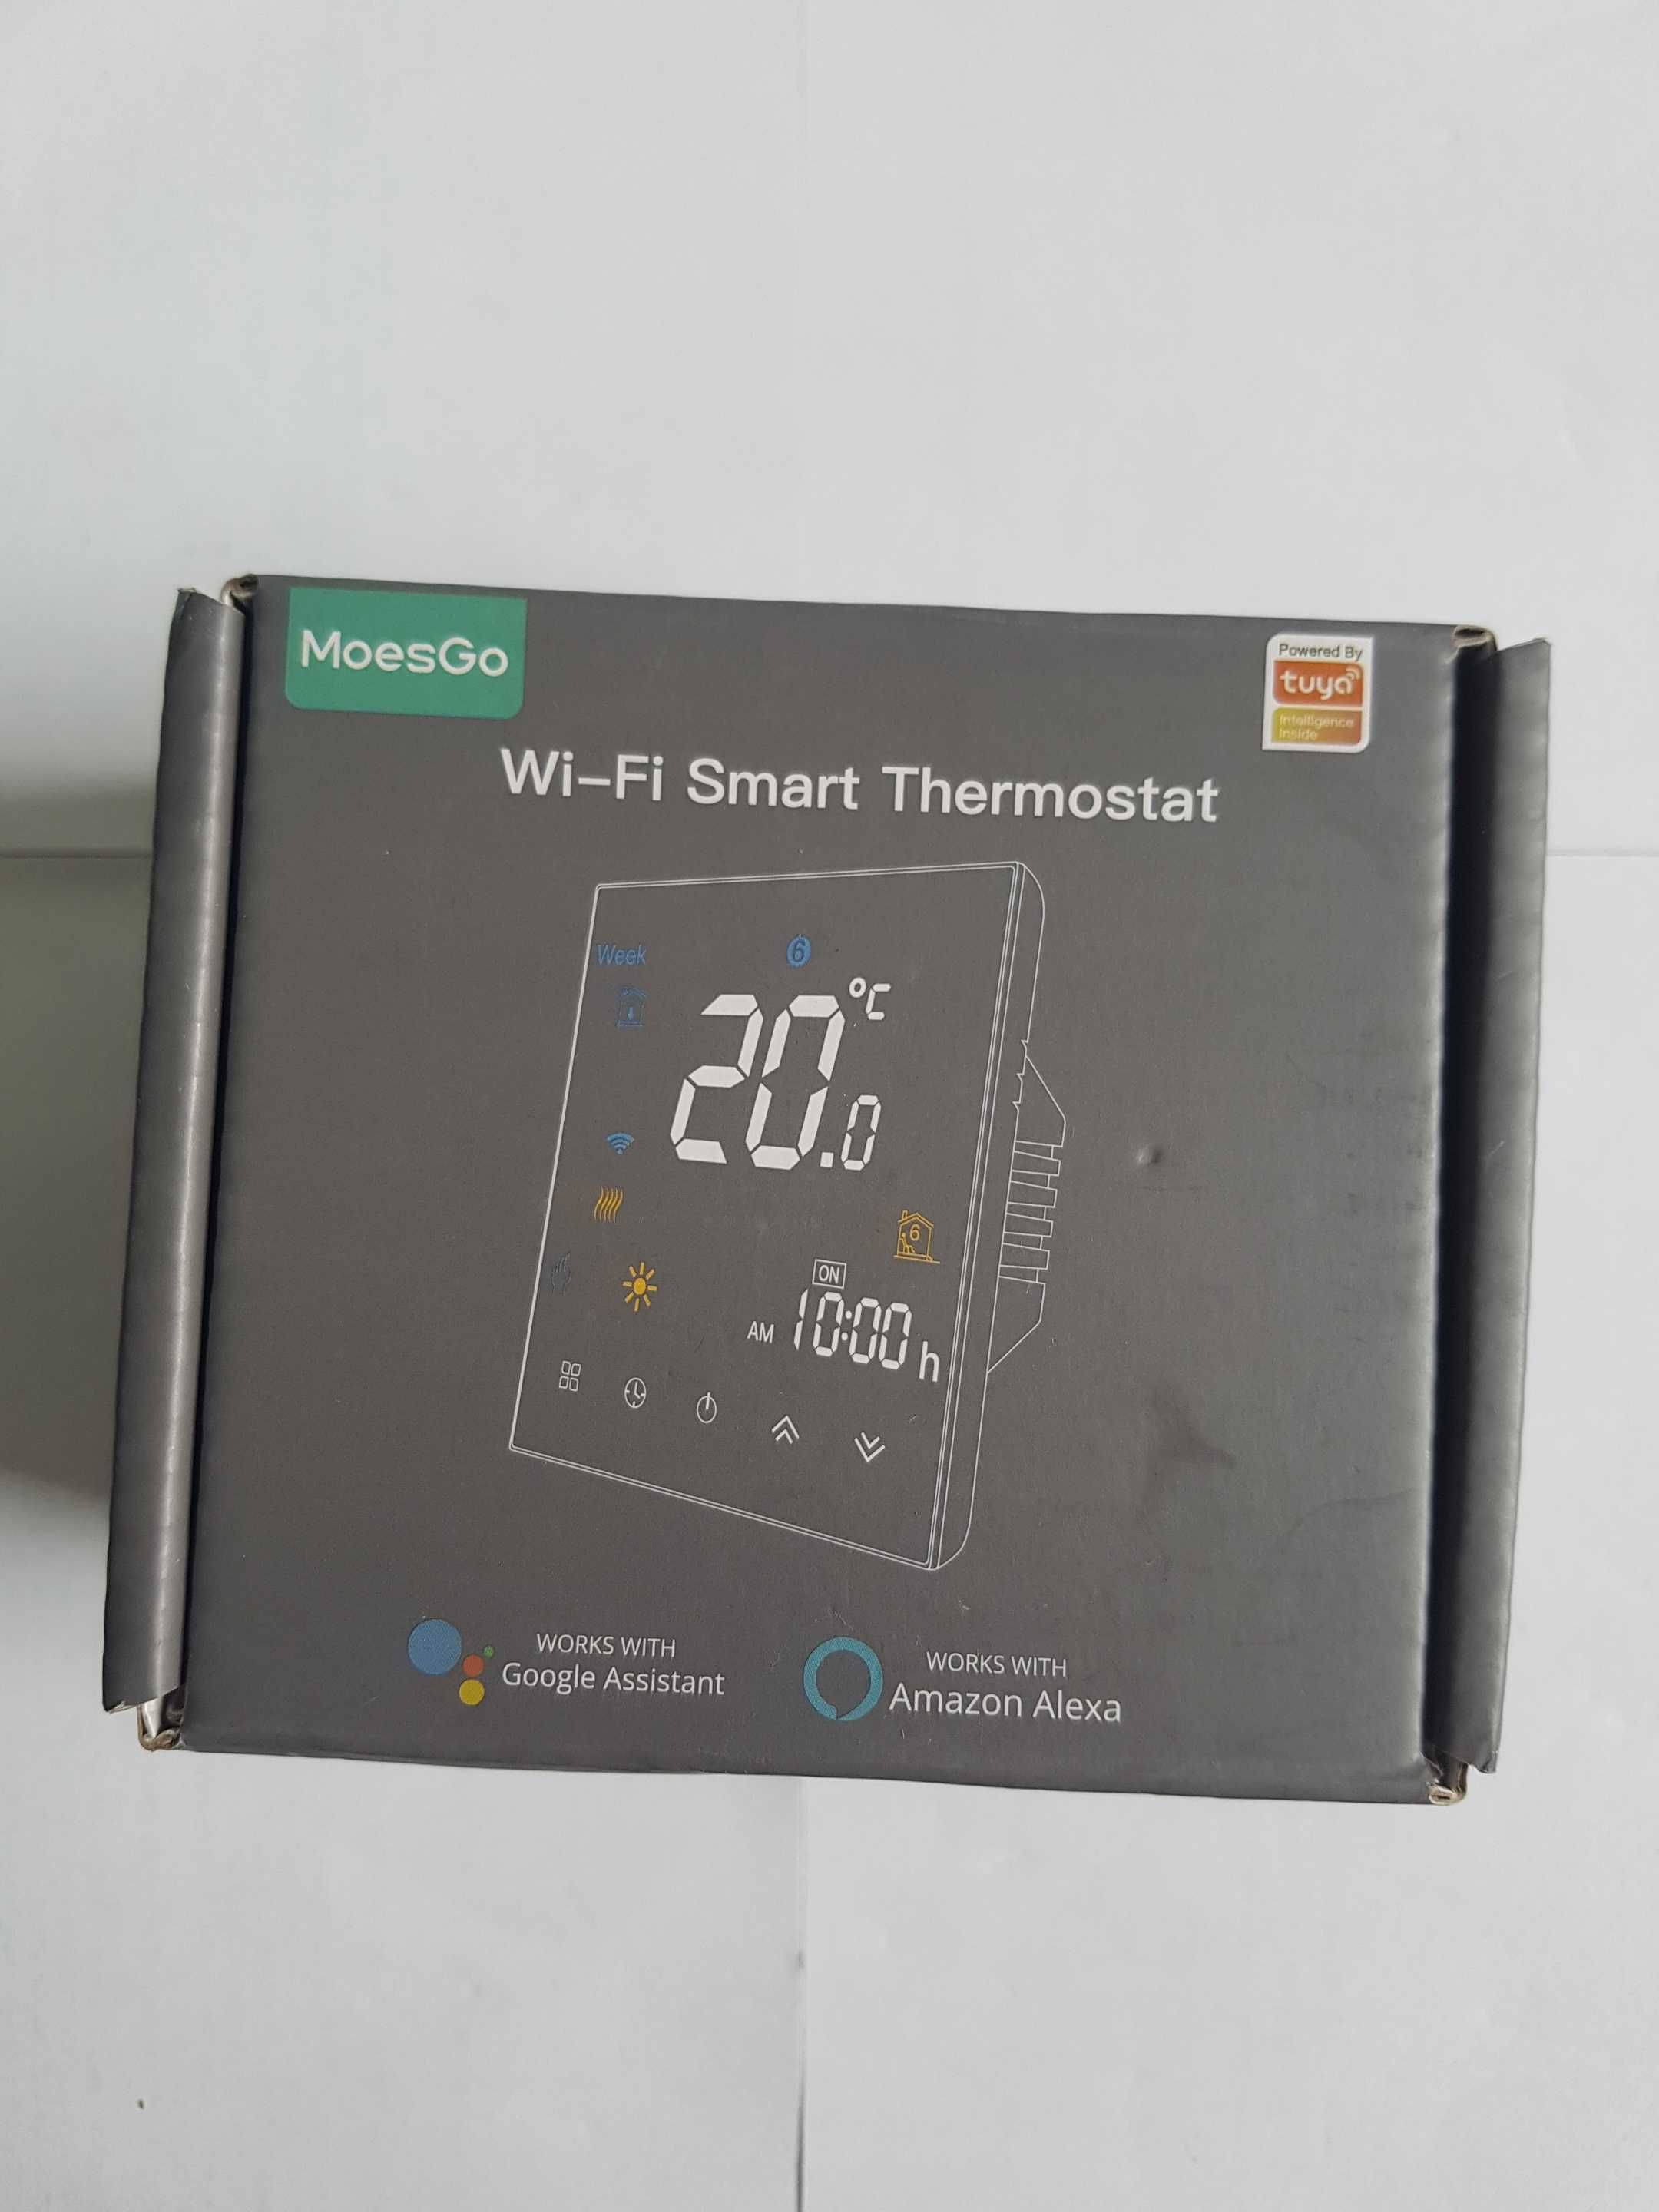 WI-FI Smart Thermostat   Moesgo